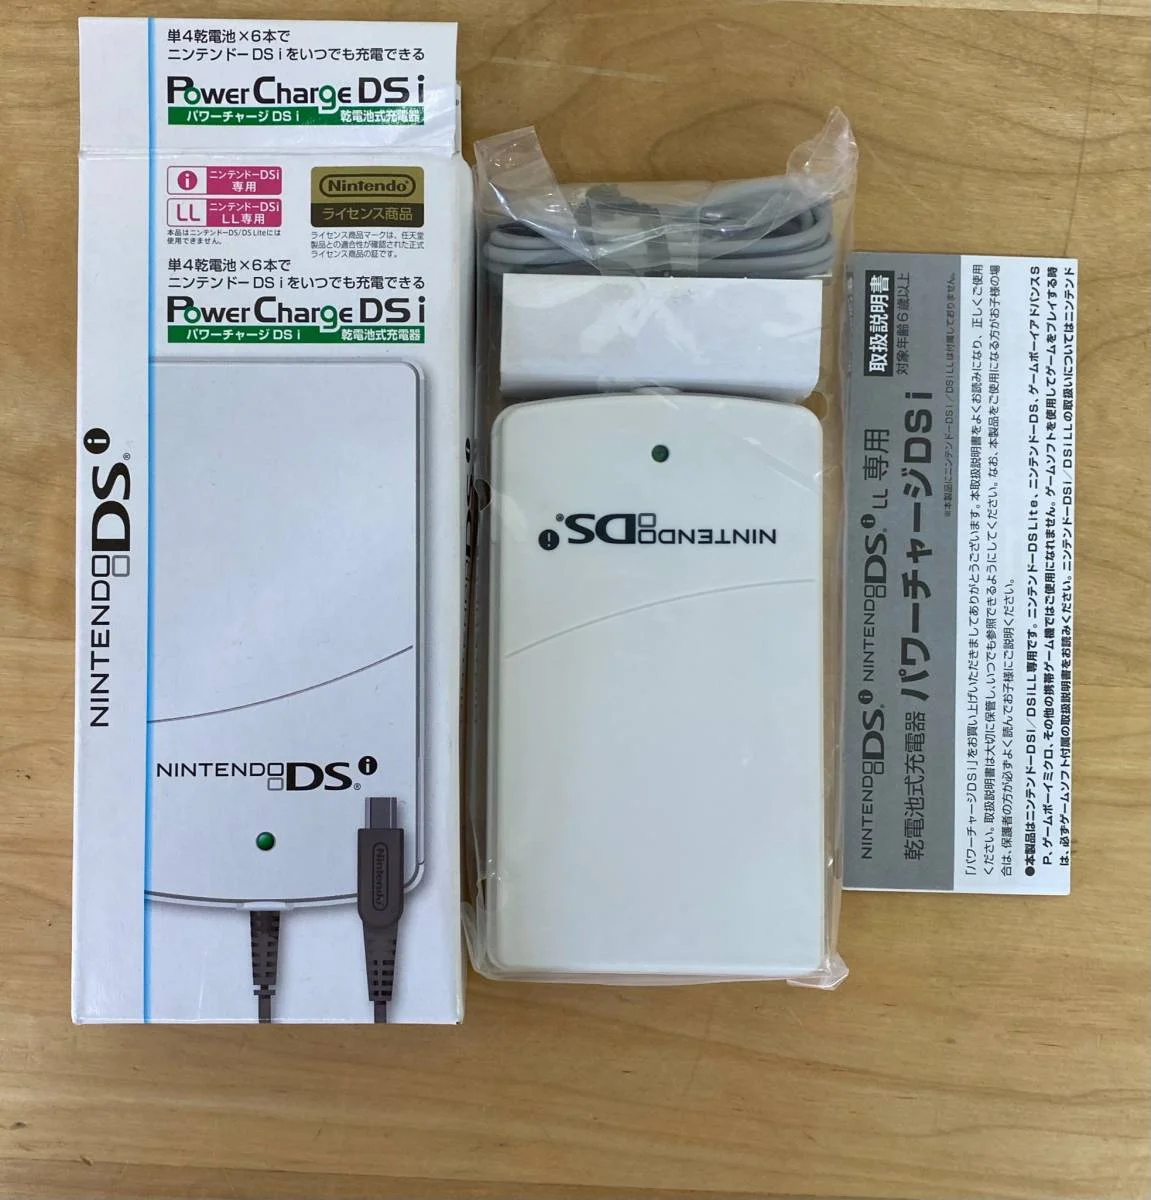  Nintendo DSi Power Charge